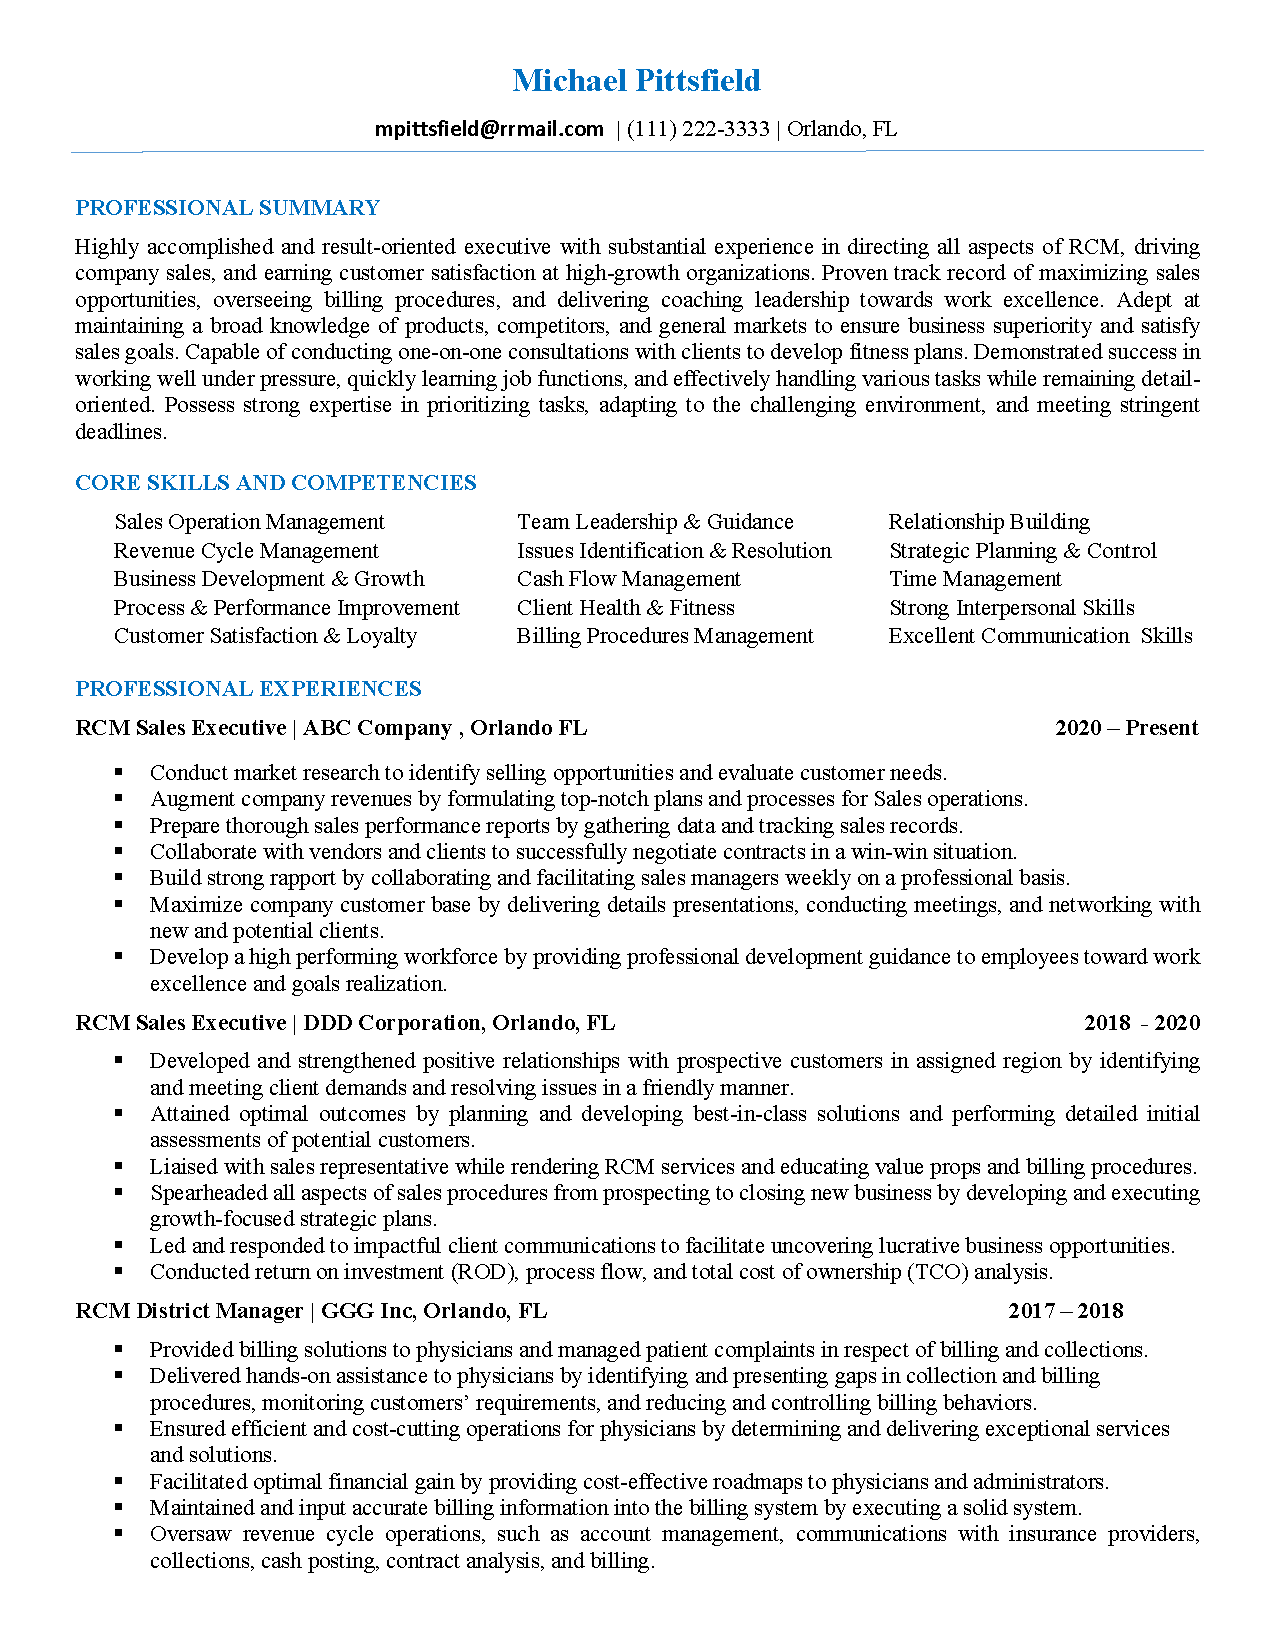 Sales professional resume